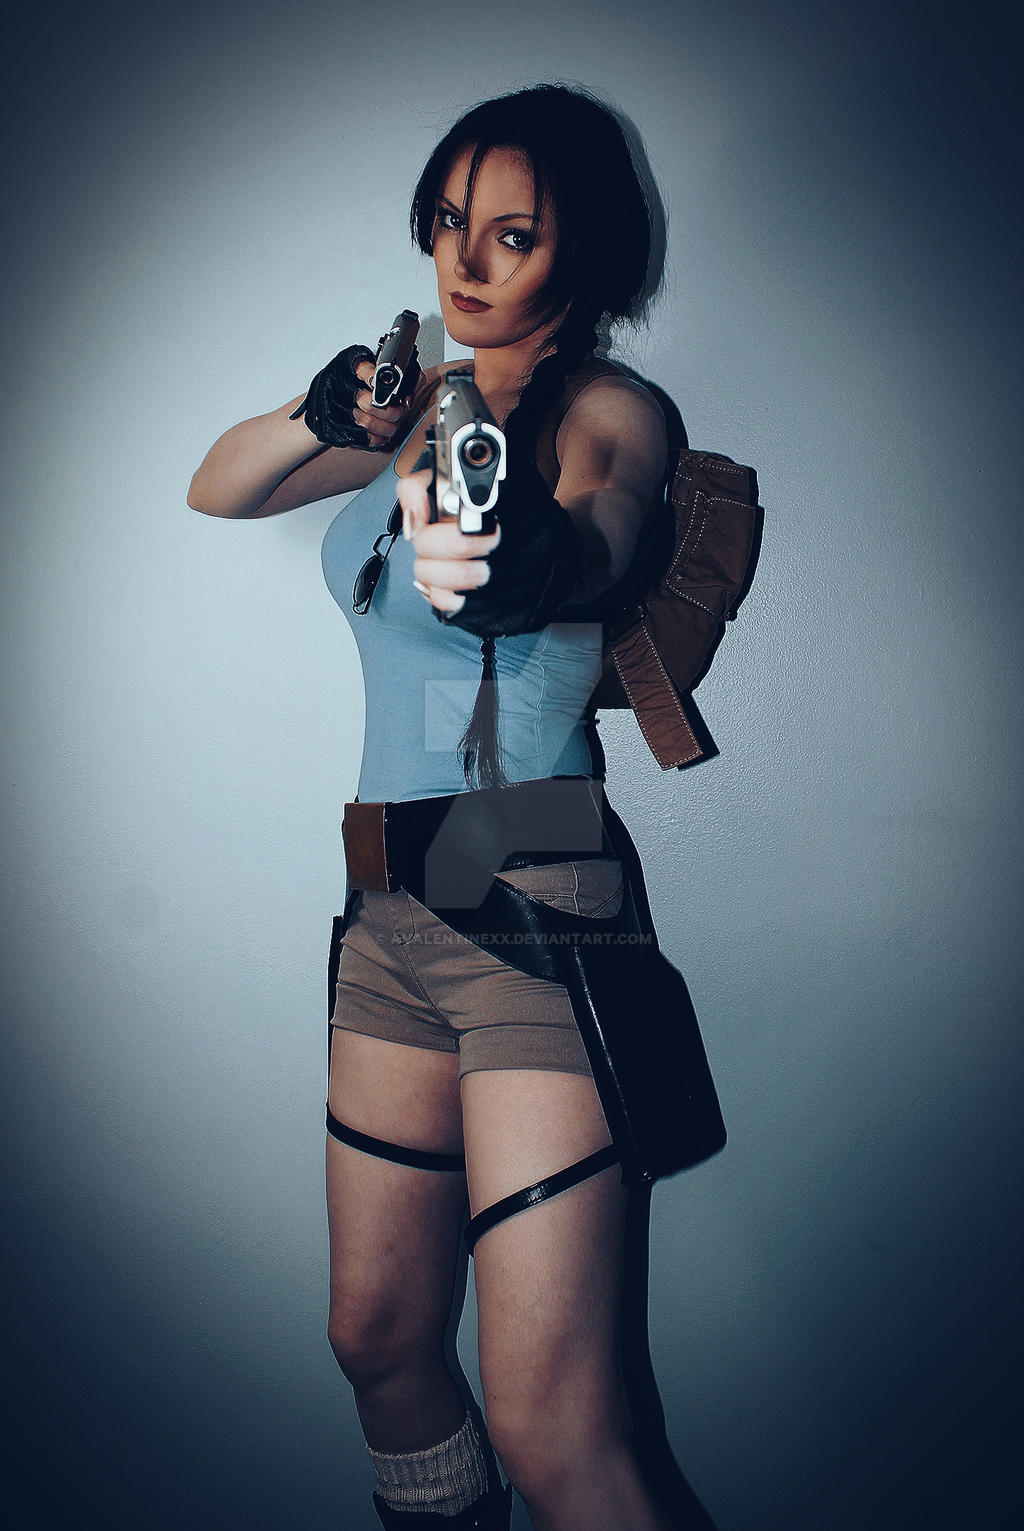 Cosplay Lara Croft by LizkaNovi on DeviantArt